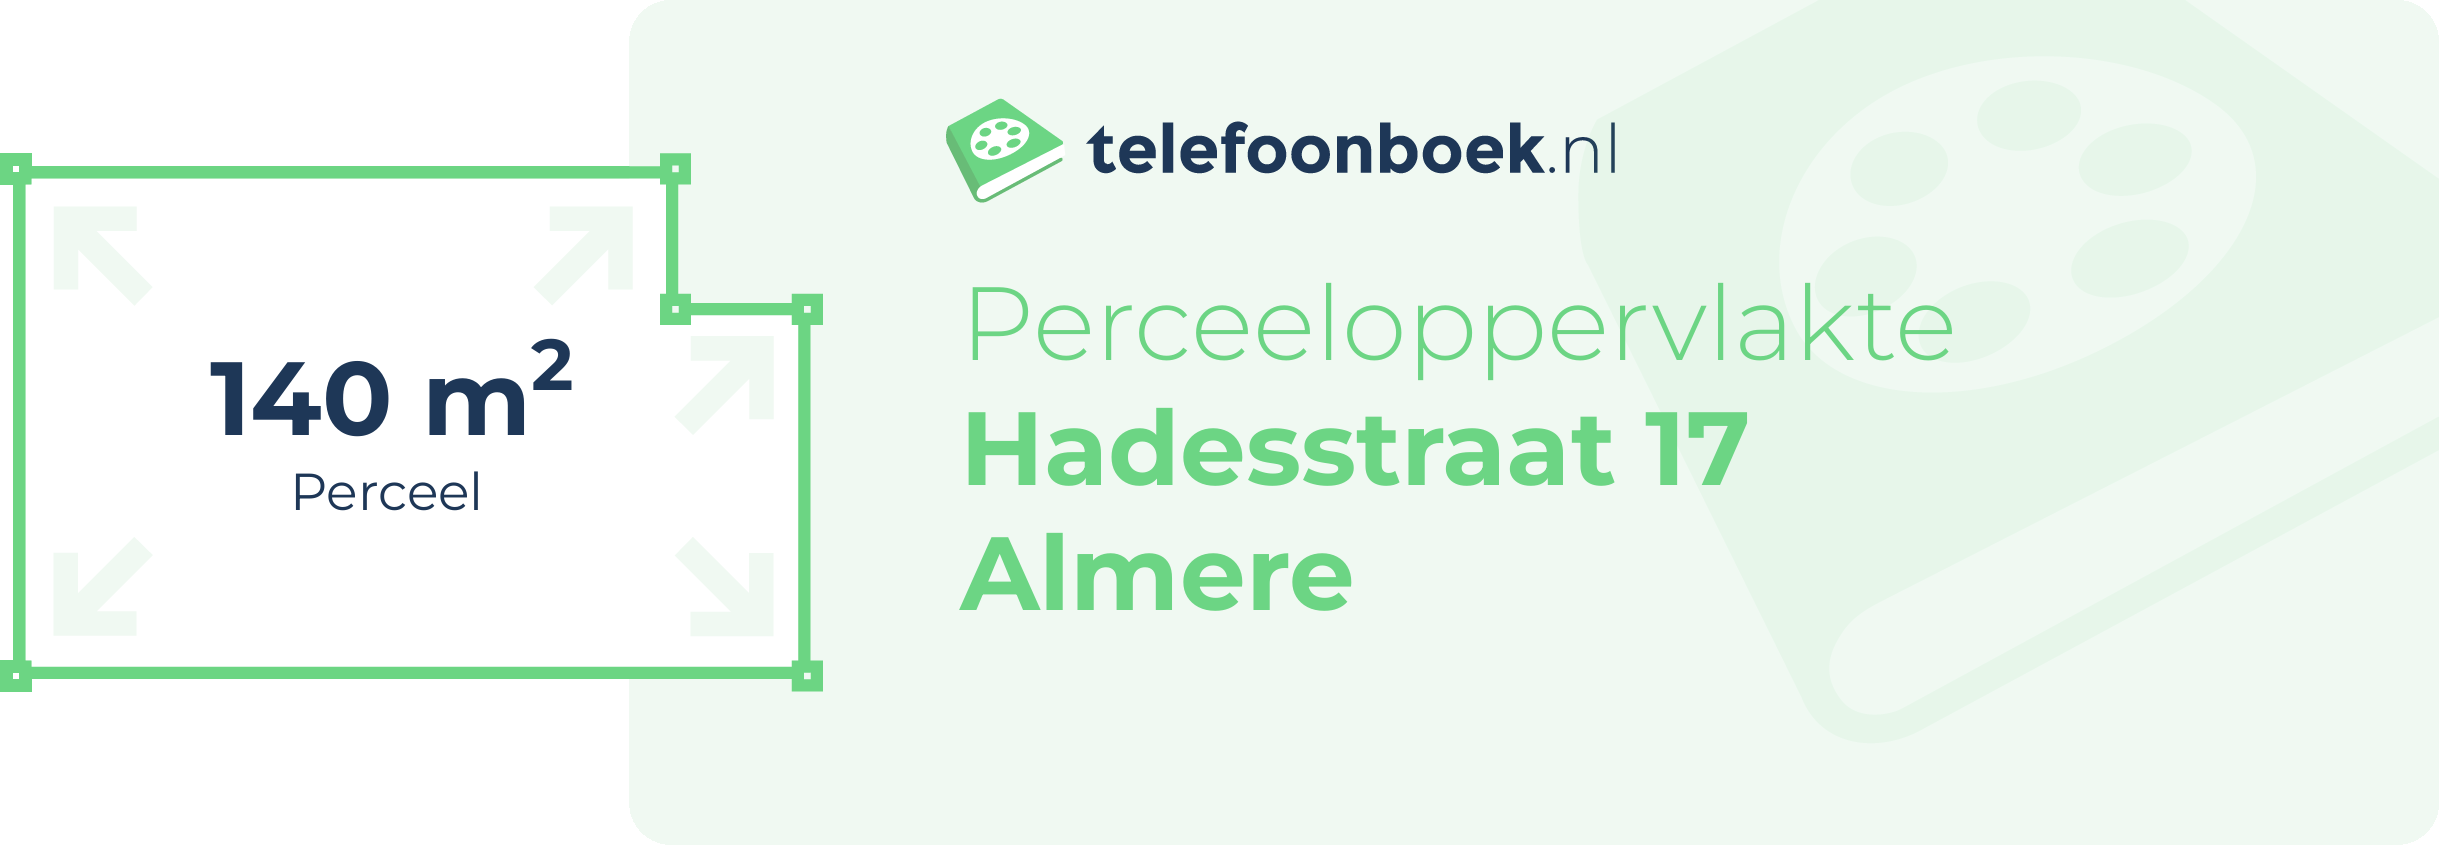 Perceeloppervlakte Hadesstraat 17 Almere